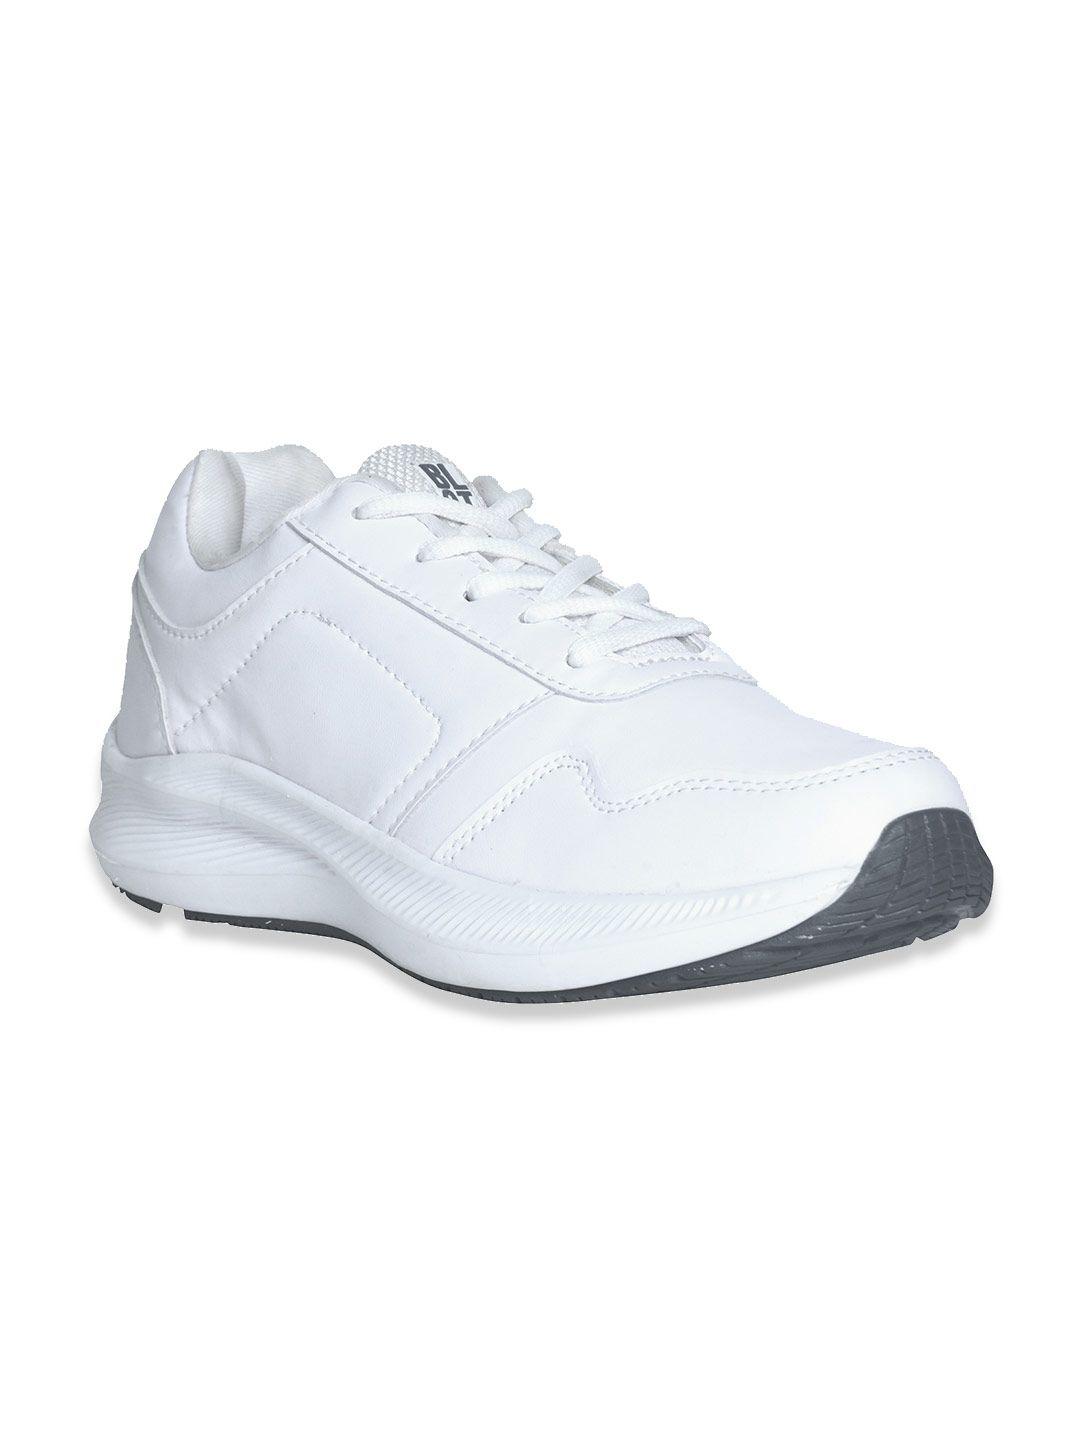 paragon men white sneakers